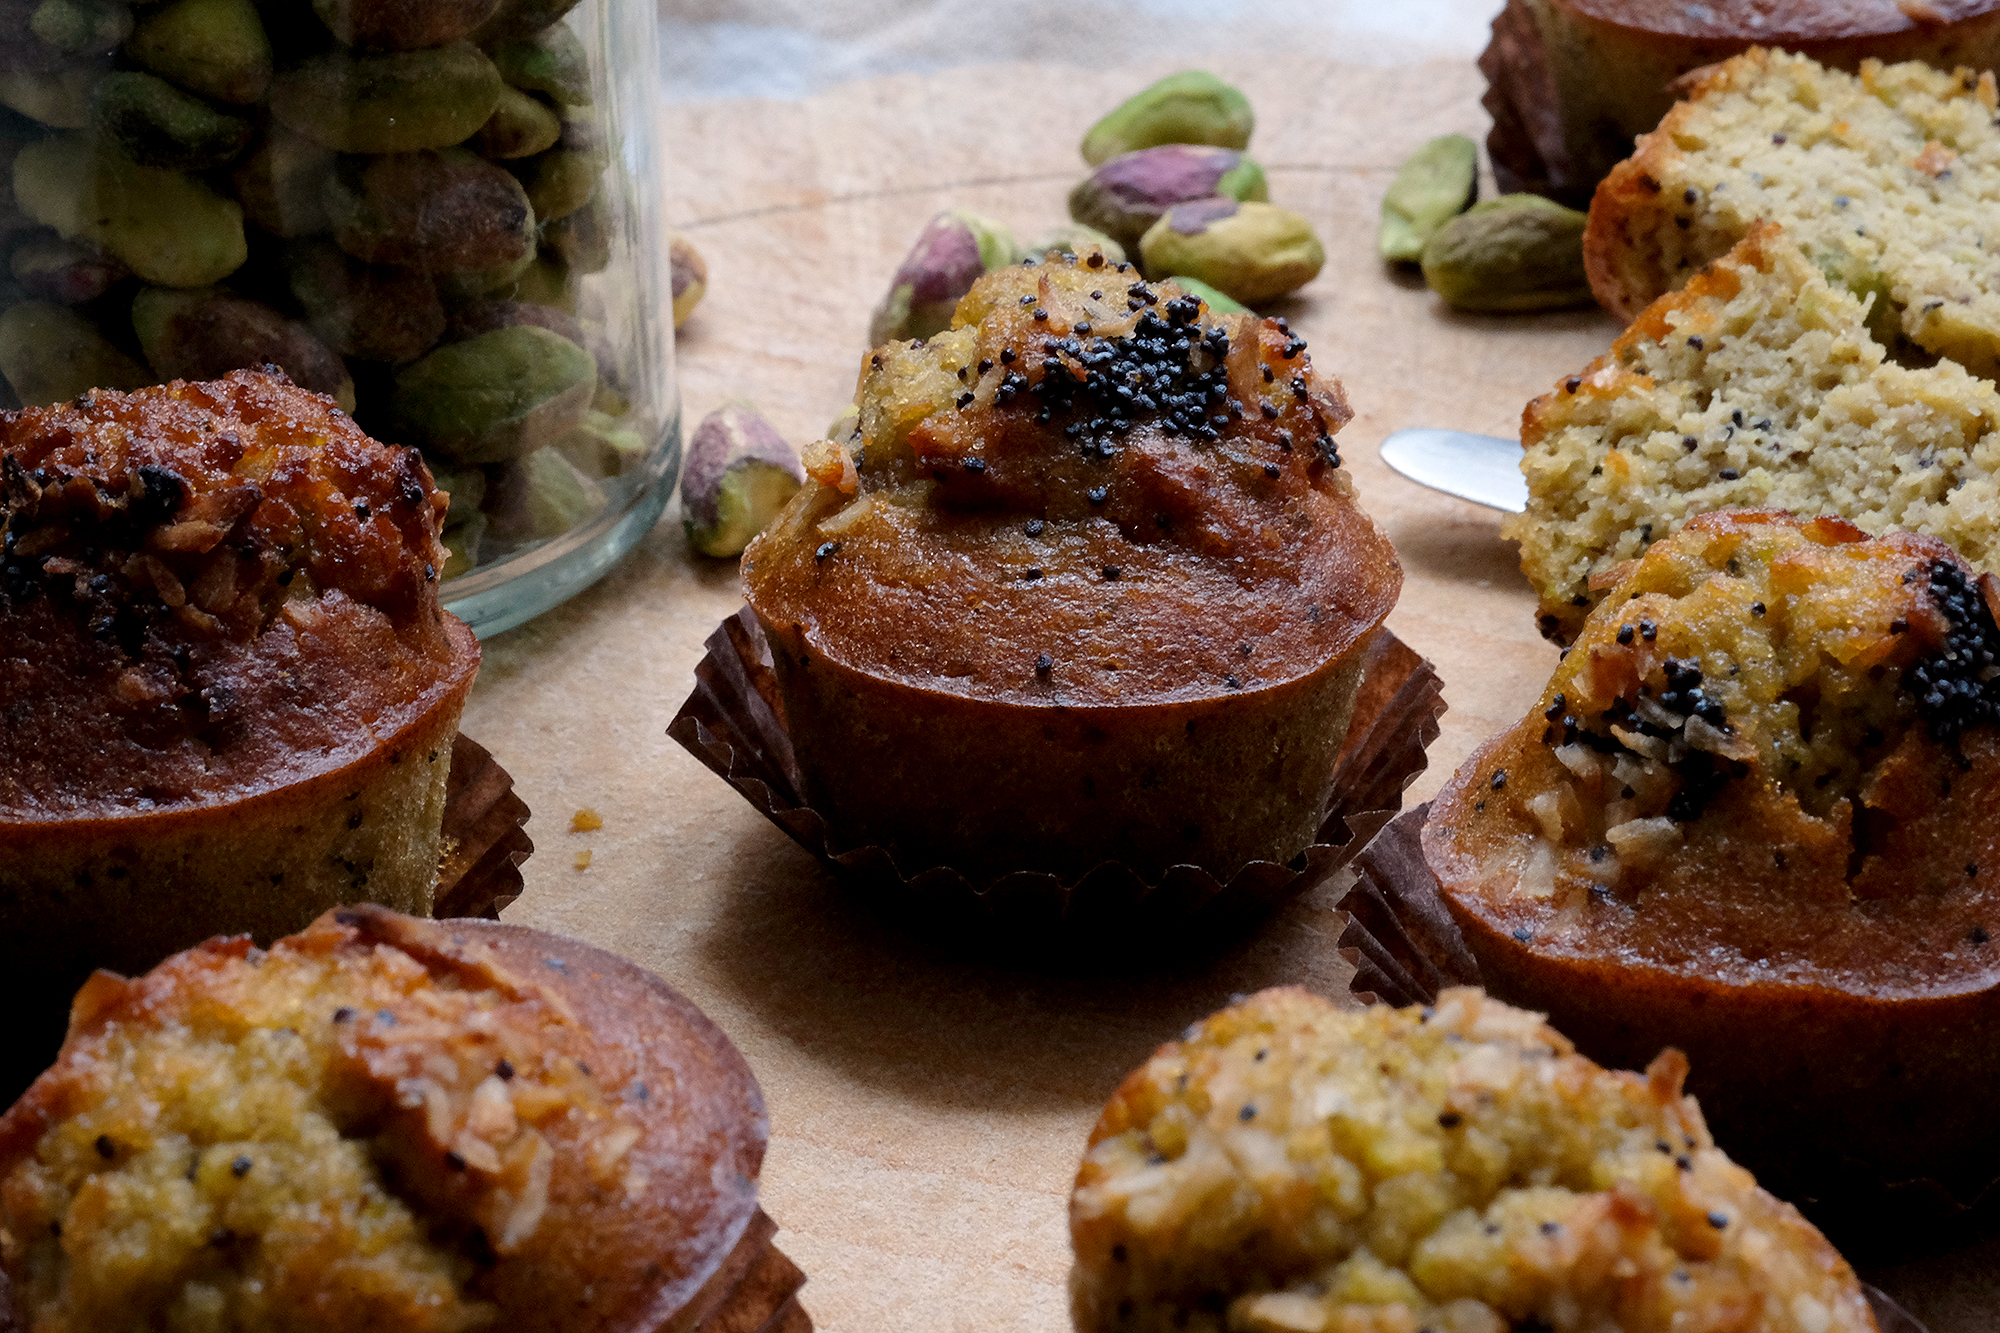 A recipe – Pistachio, poppy seeds & lemon muffins